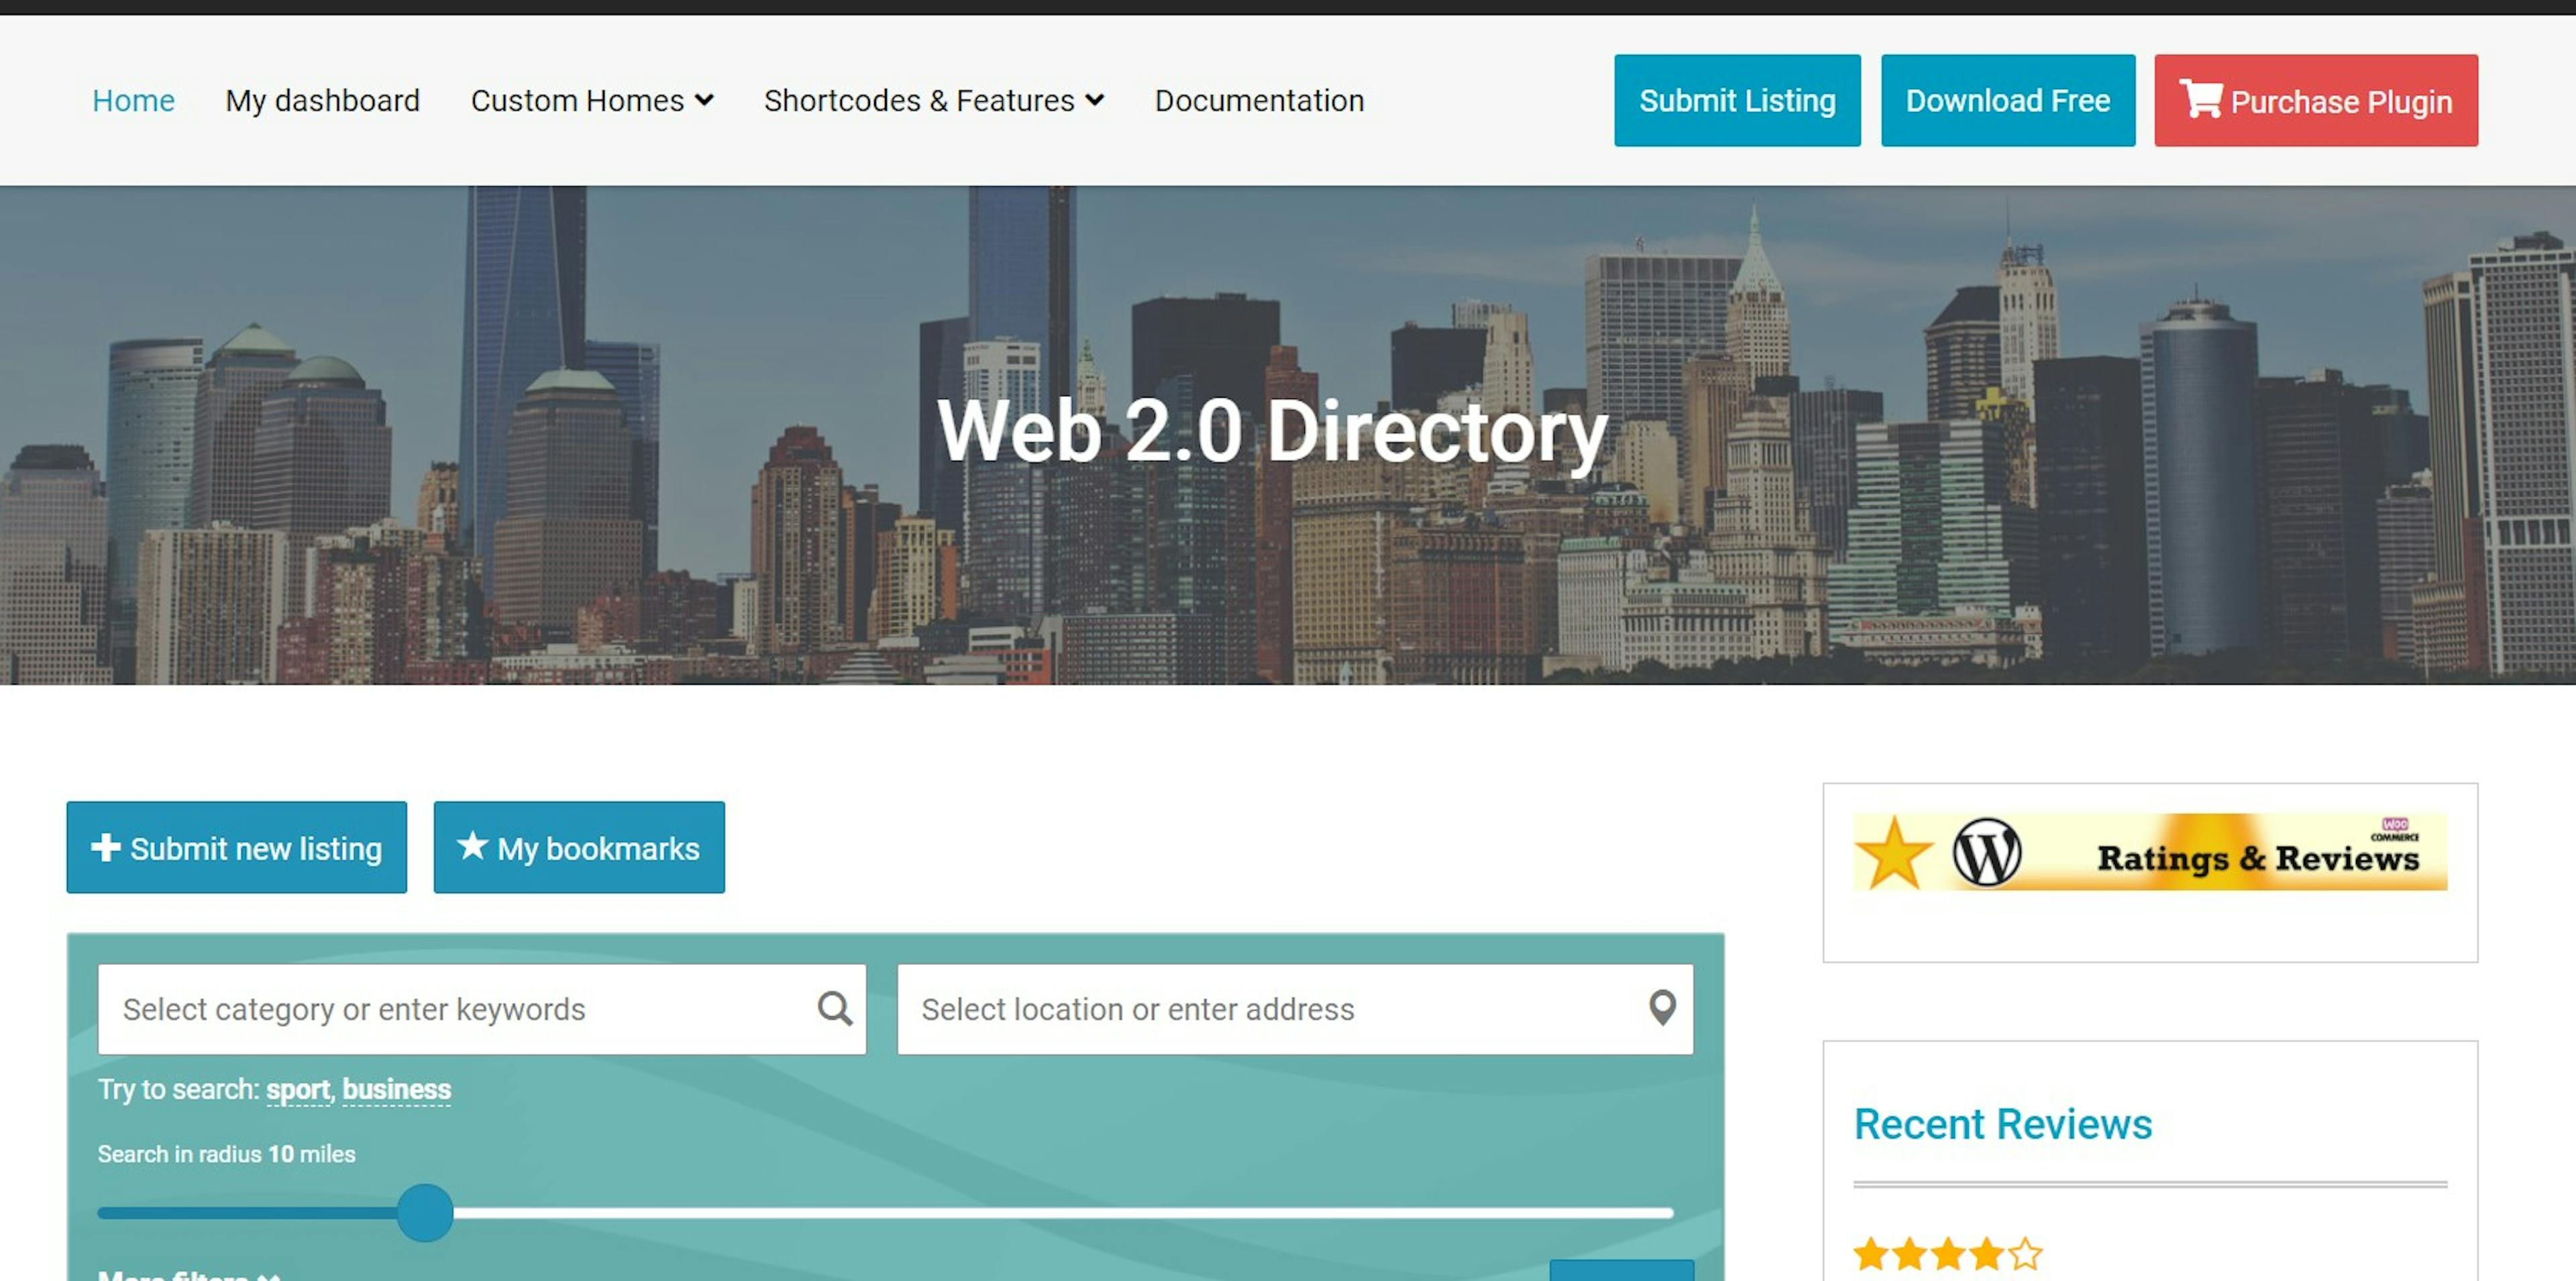 Web 2.0 Directory